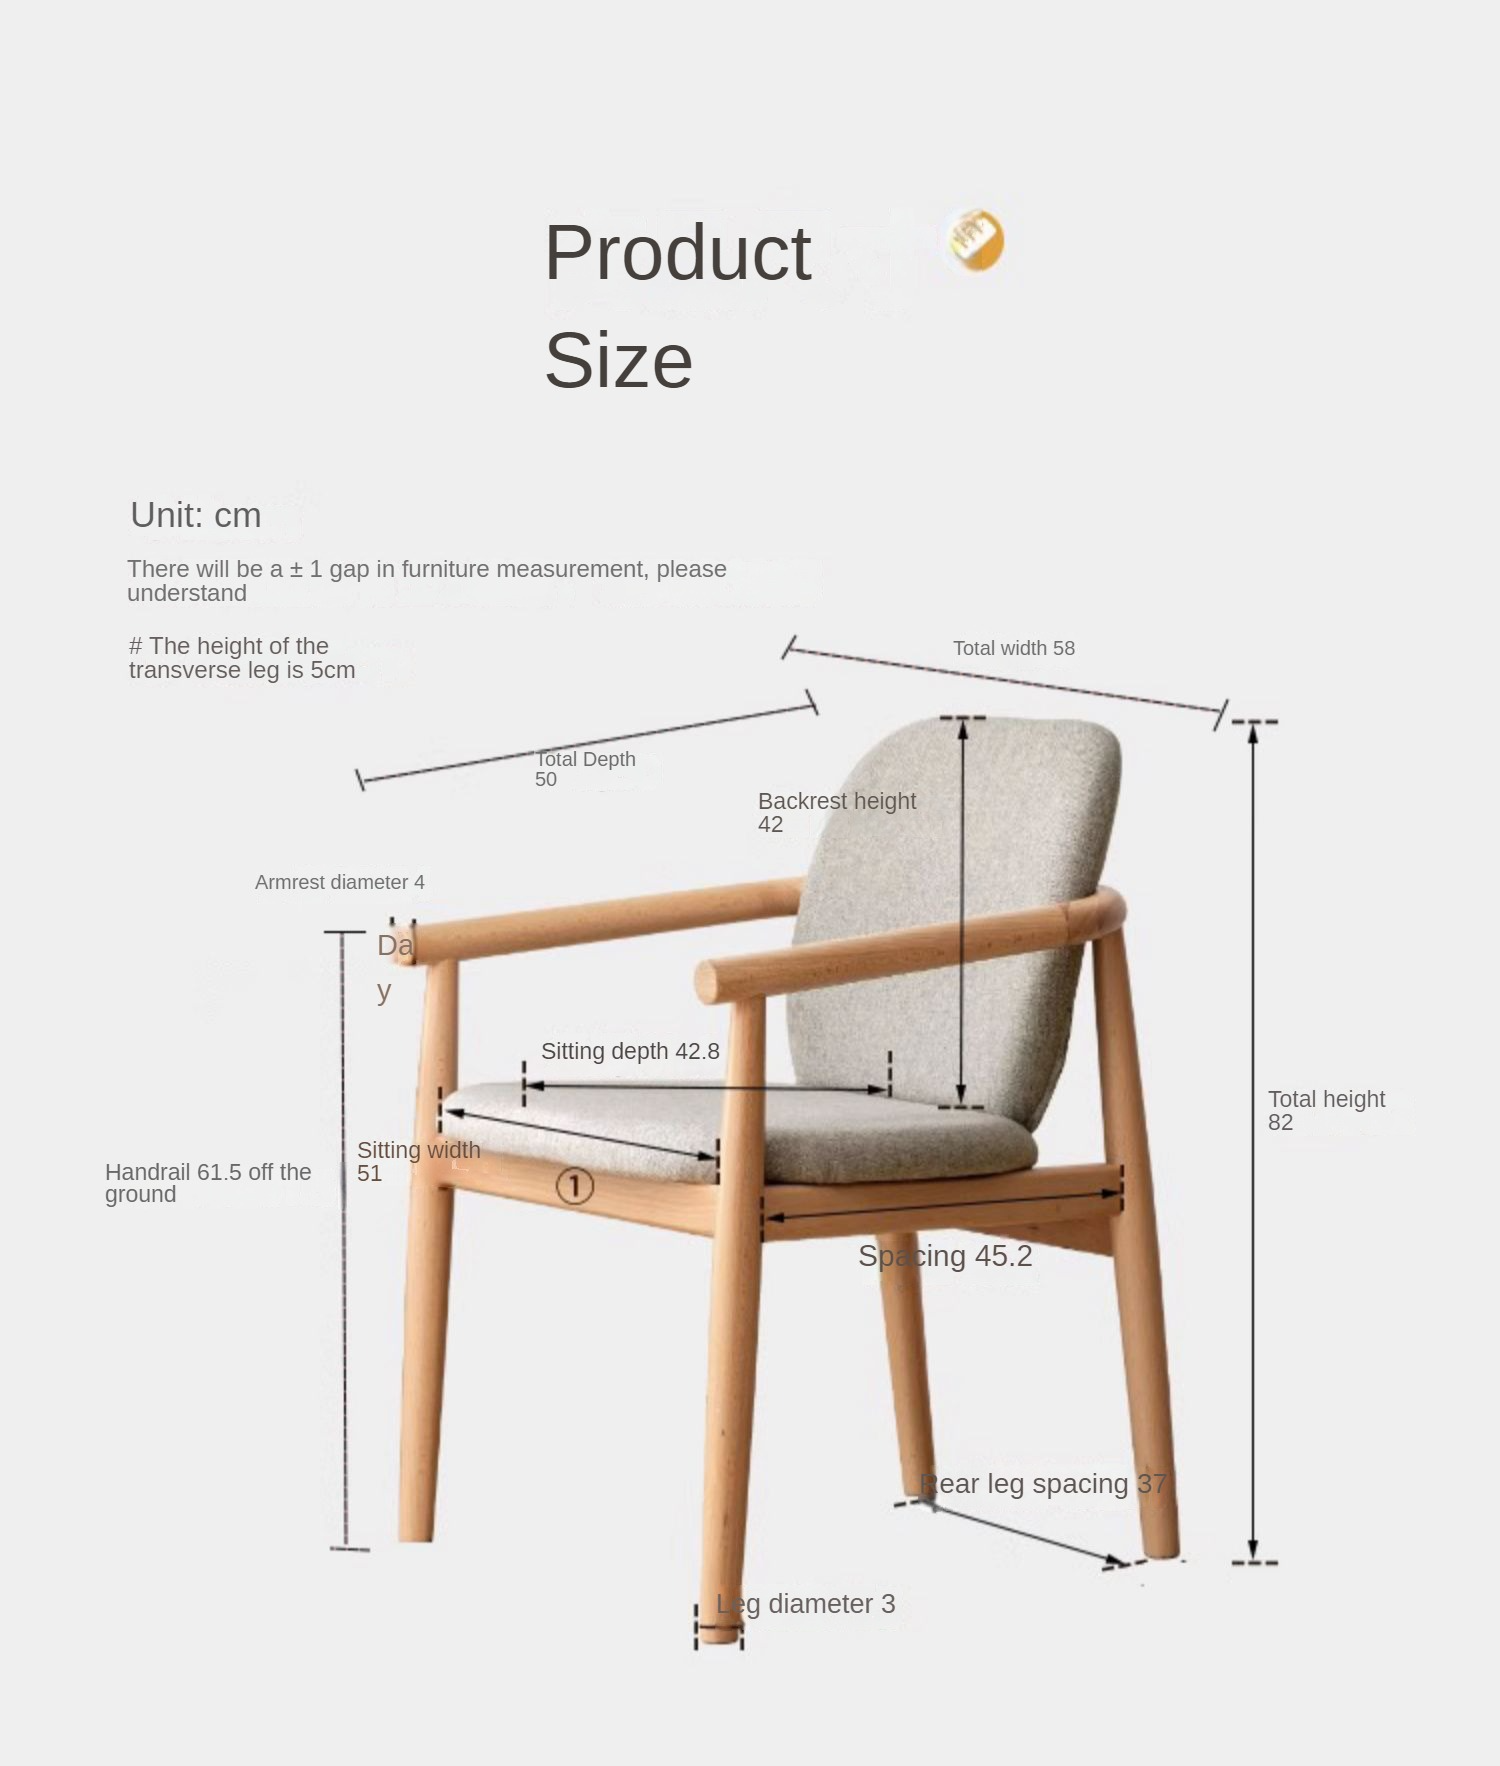 Beech solid wood armchair Nordic"-